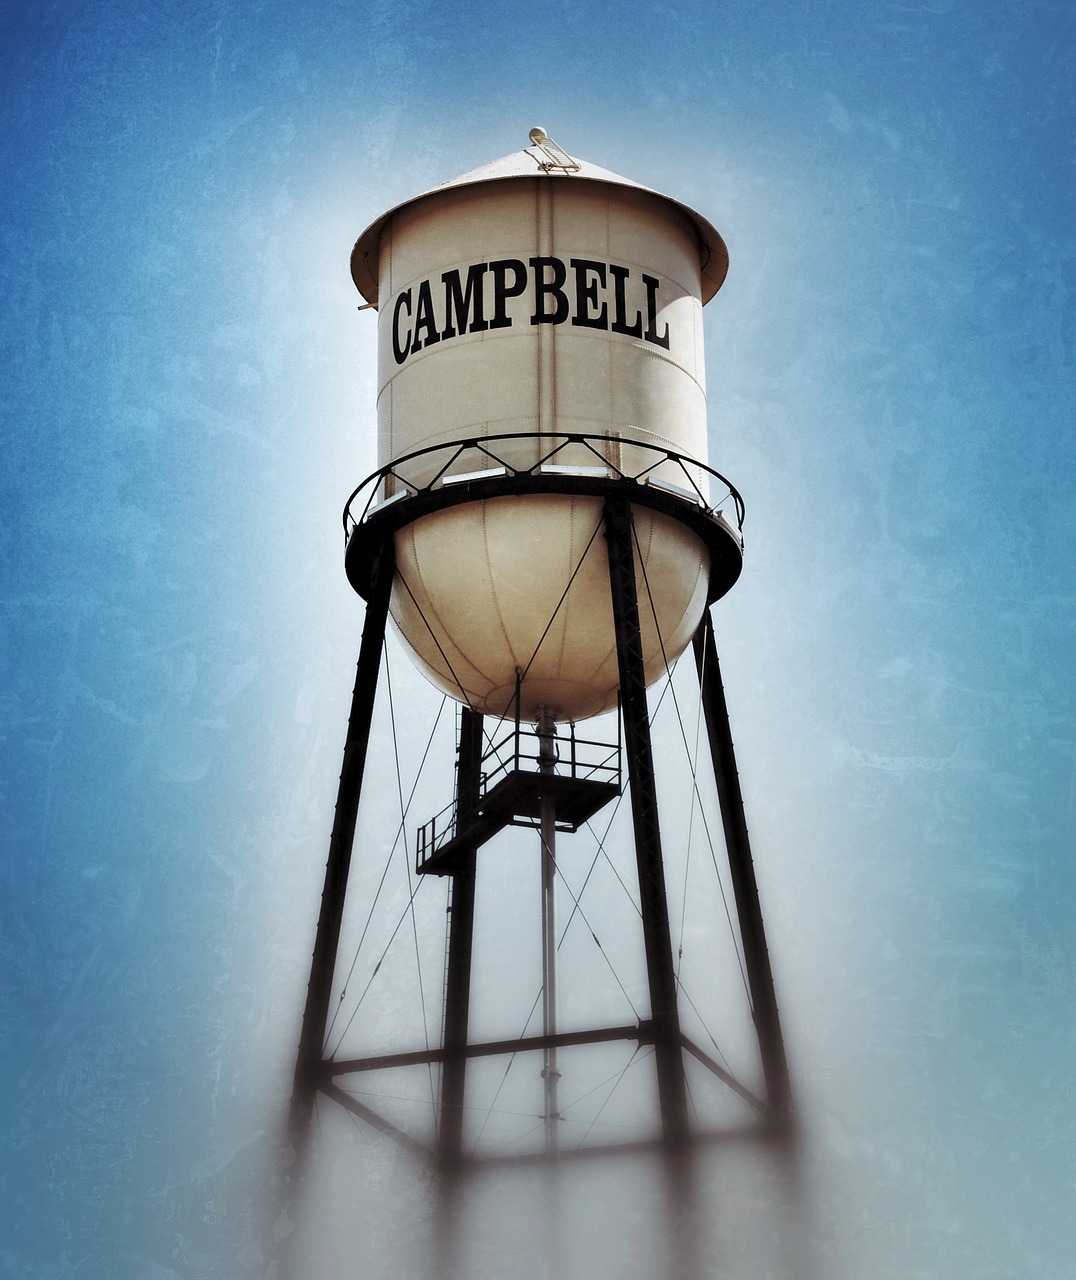 Campbell's Quesadillas